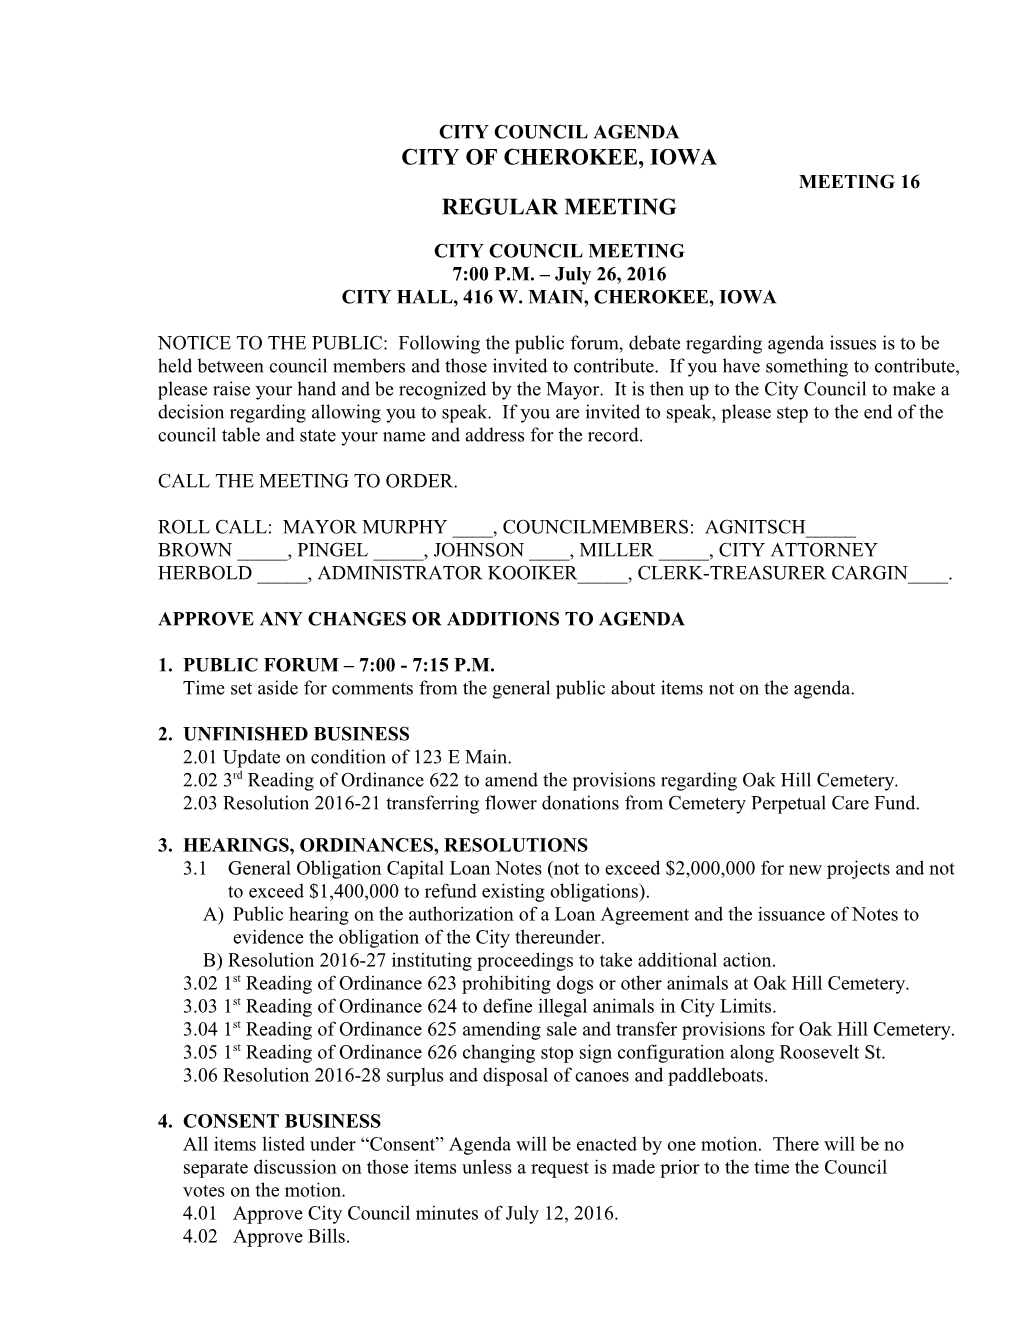 City Council Agenda s4